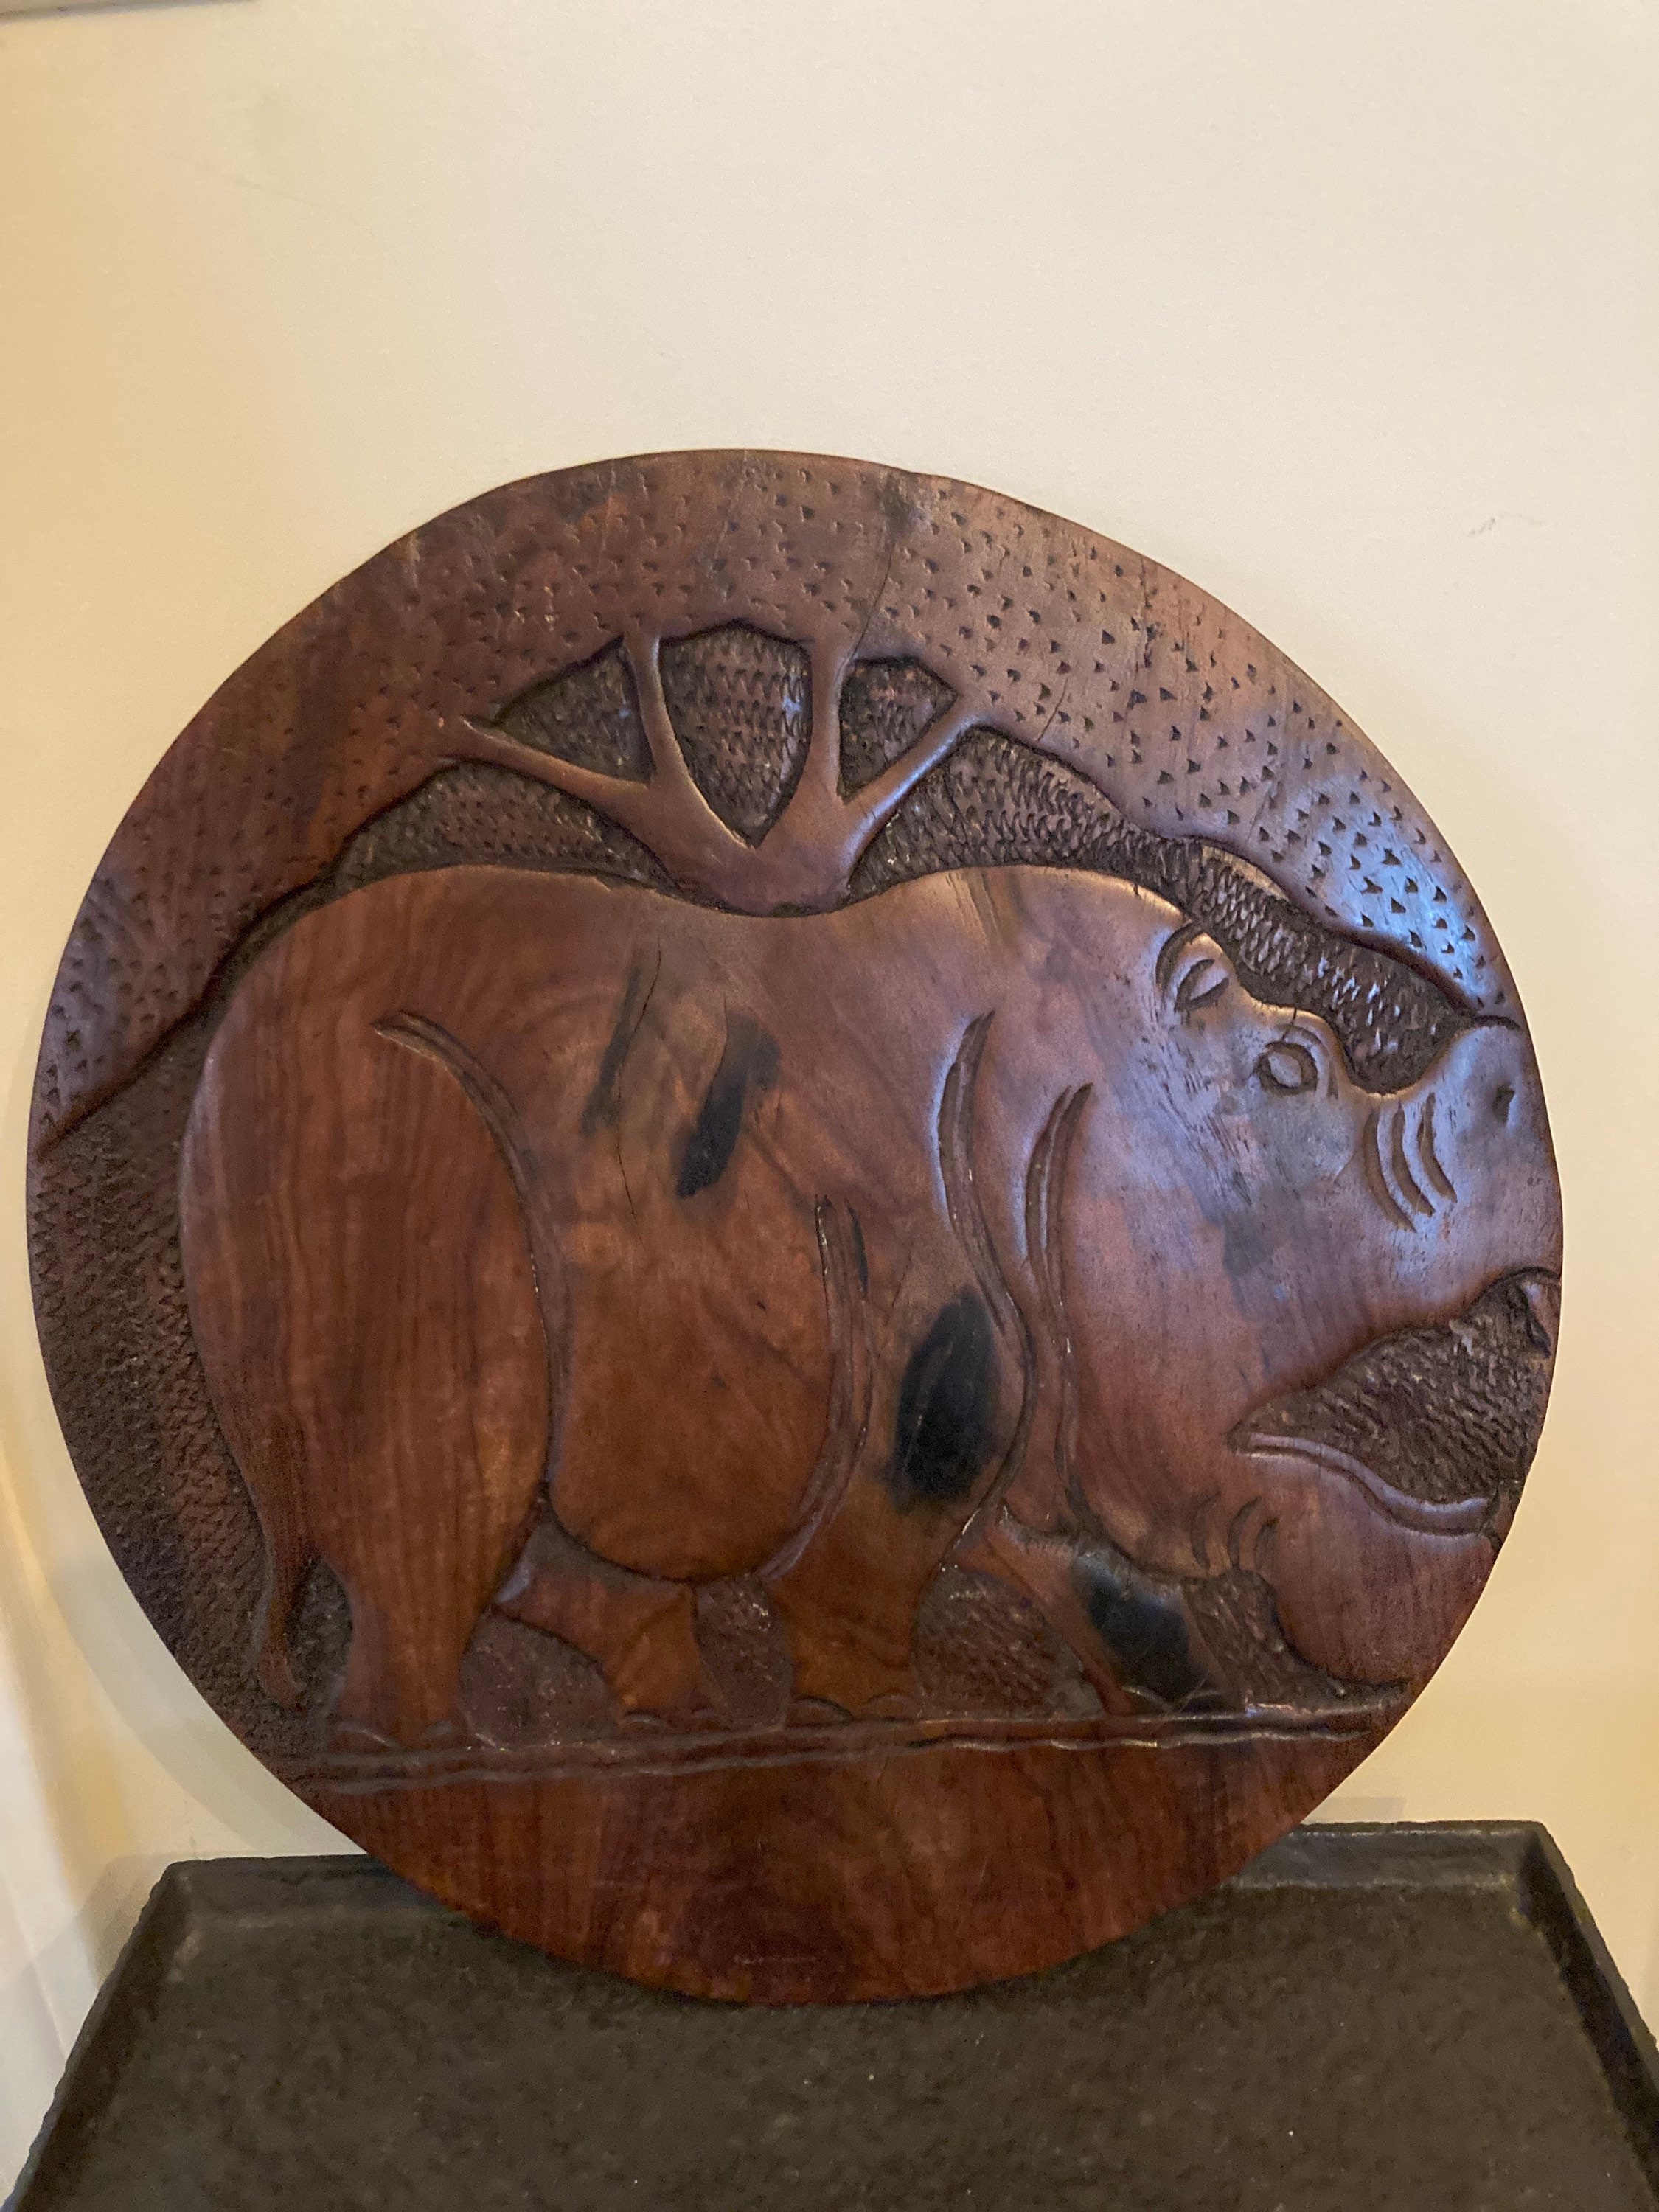 Round thuja wood tray – Lux Najma